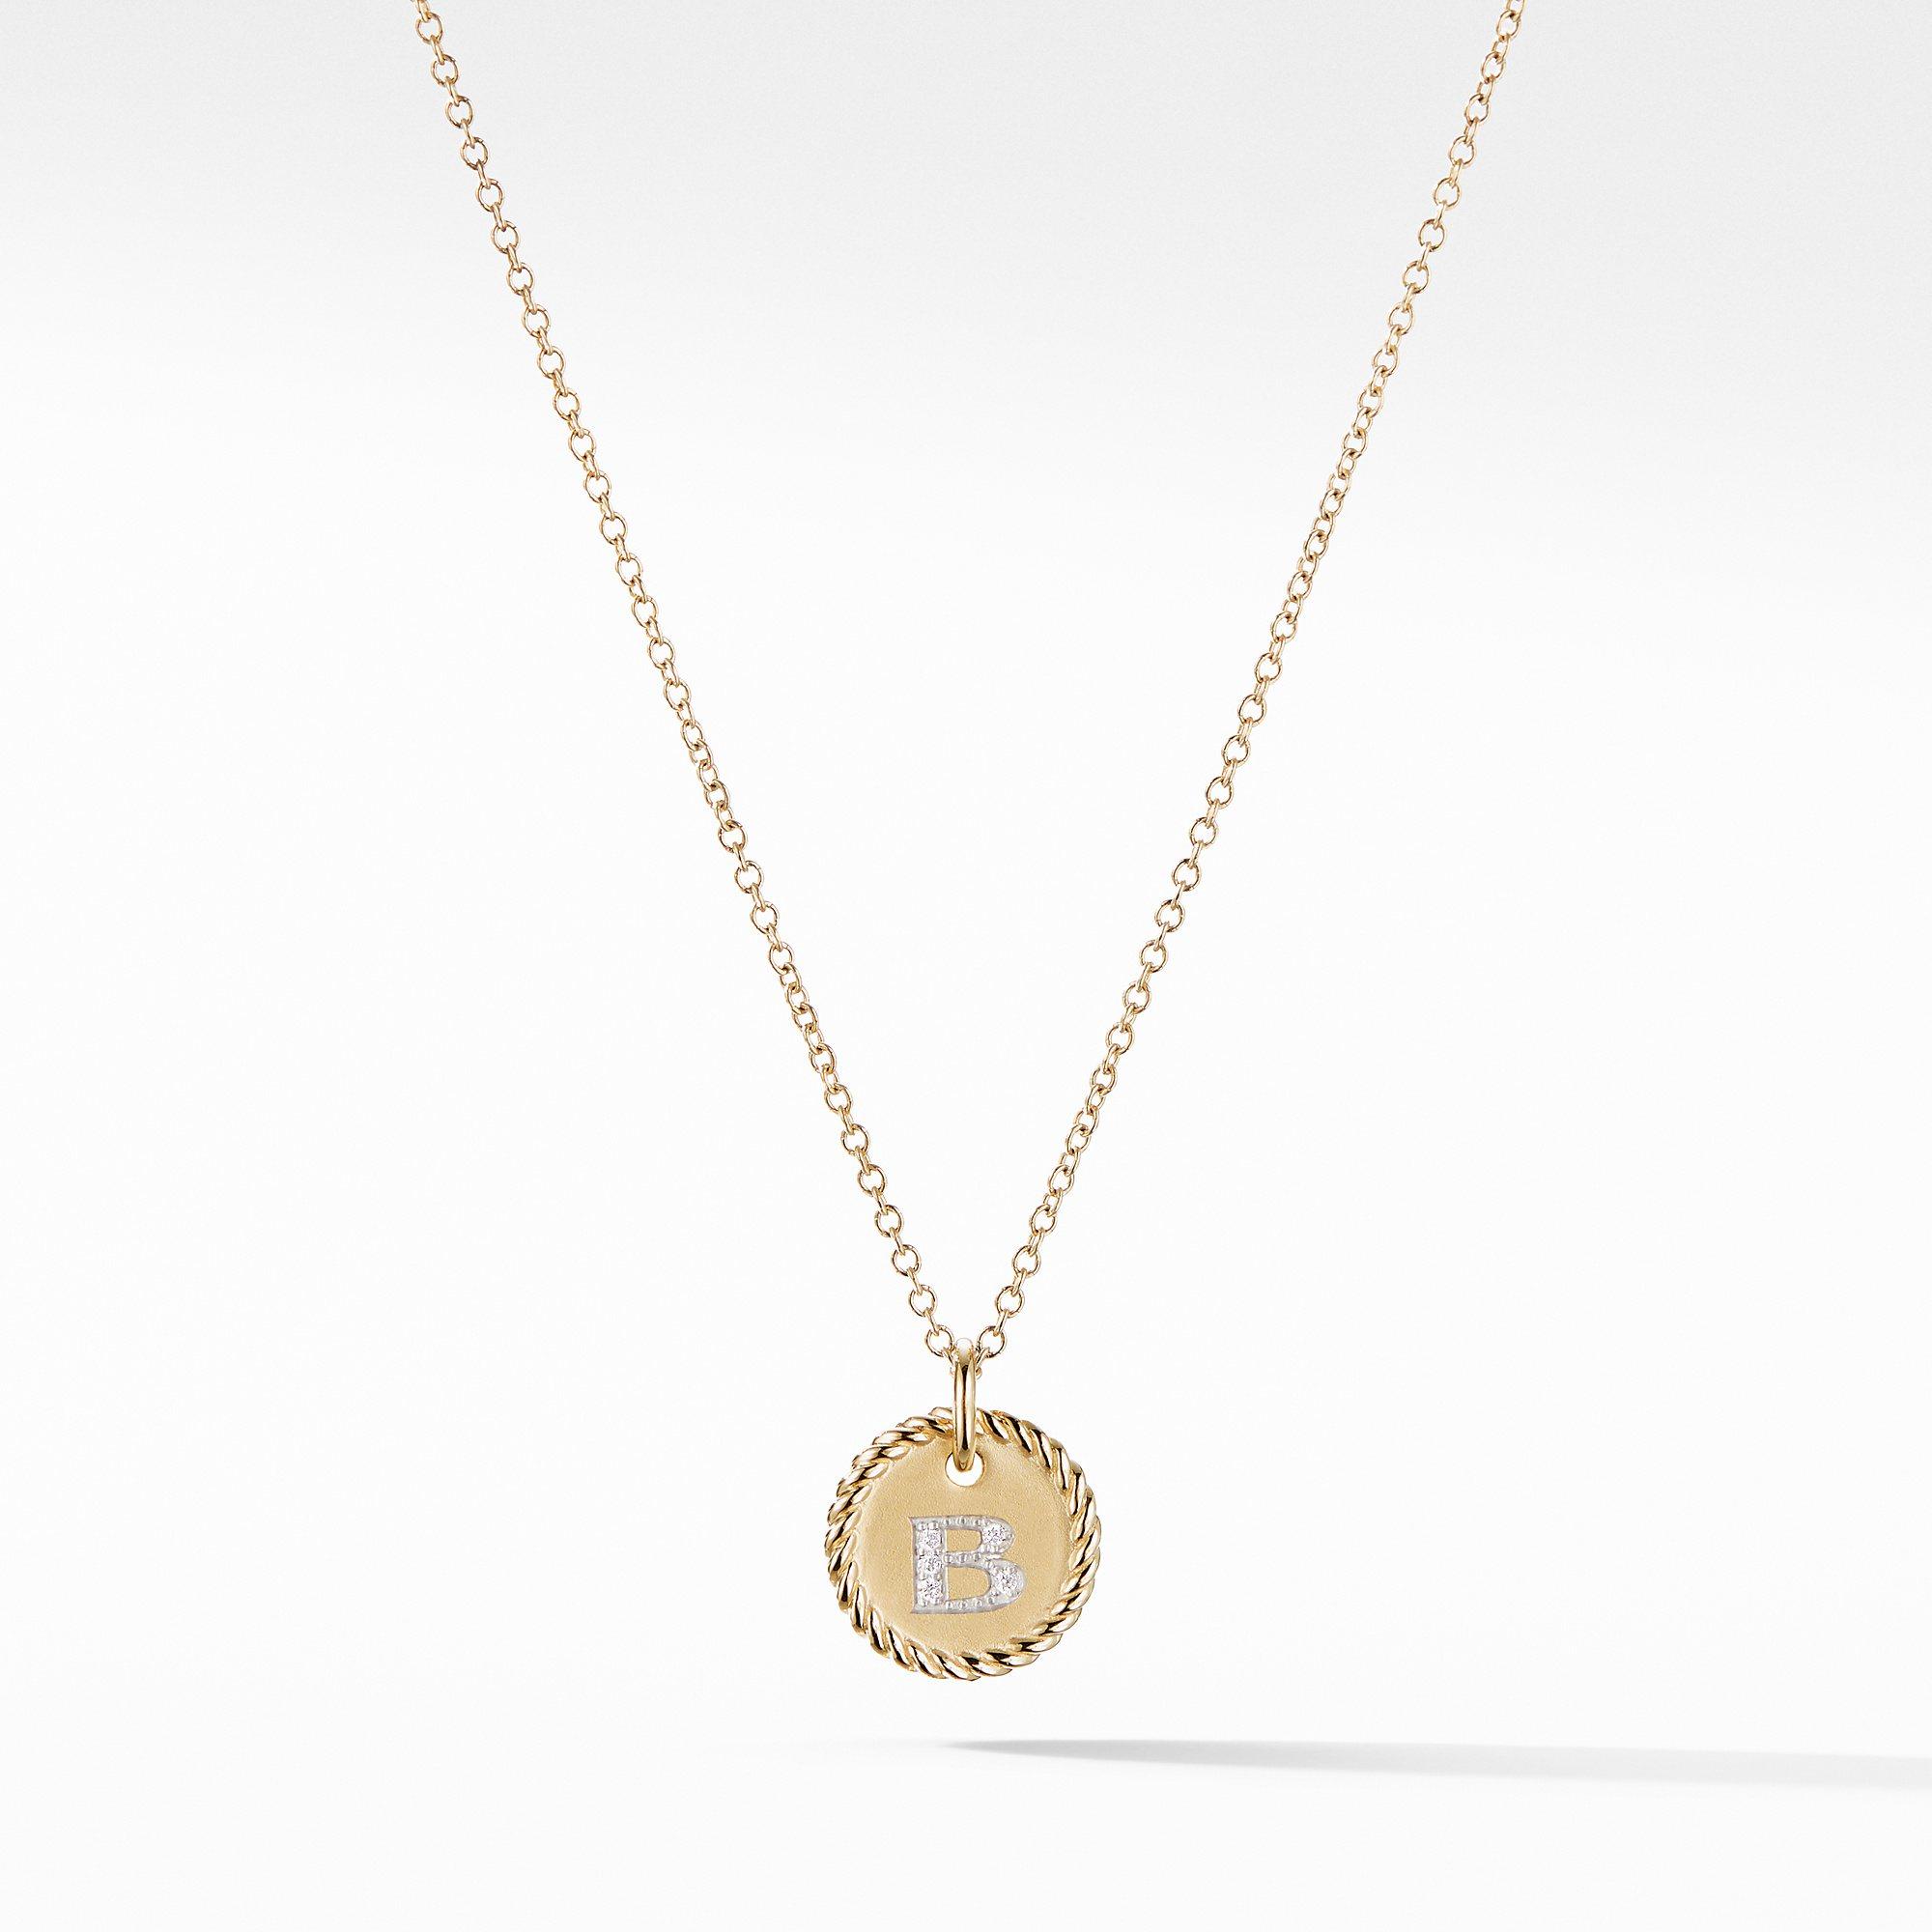 David Yurman B Initial Charm Necklace in 18k Yellow Gold with Diamonds